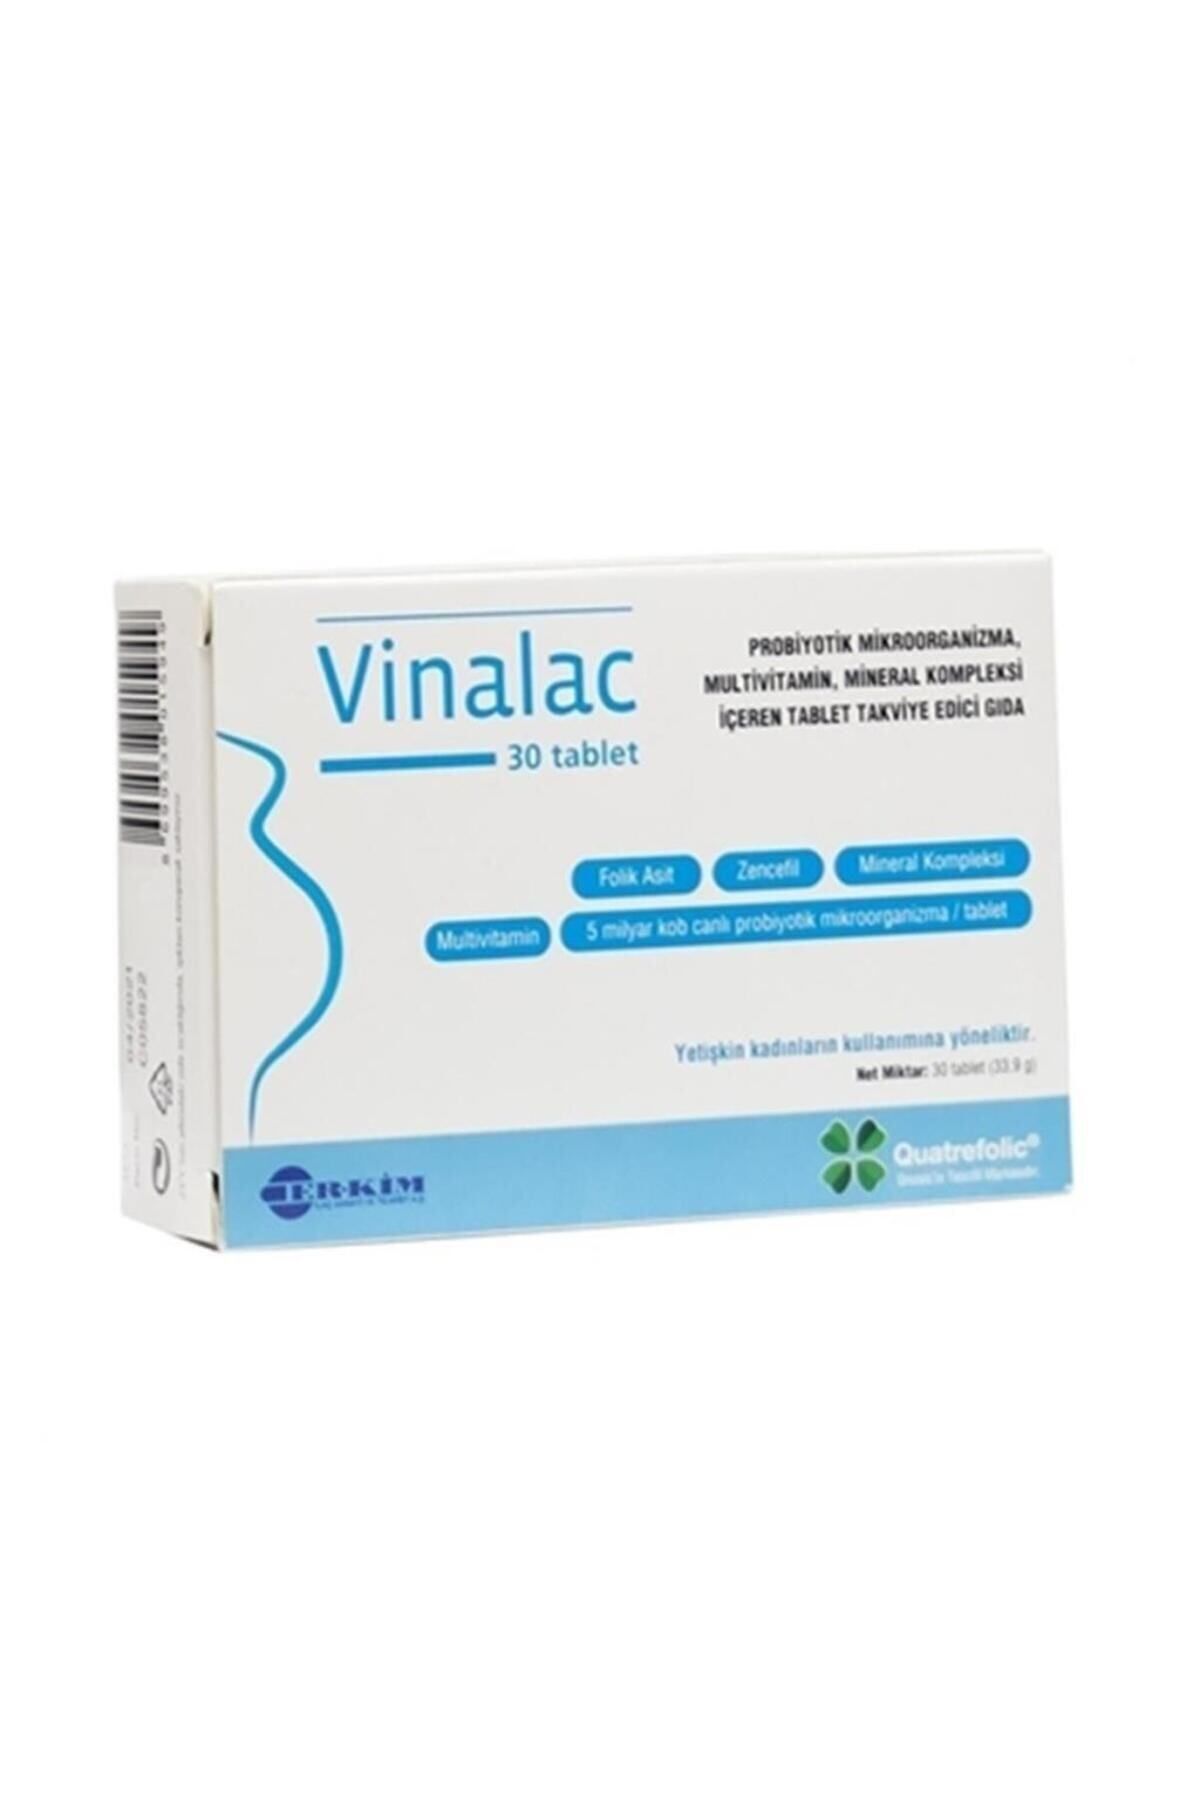 Vinaldi Vinalac Immunitum 30 Tablet